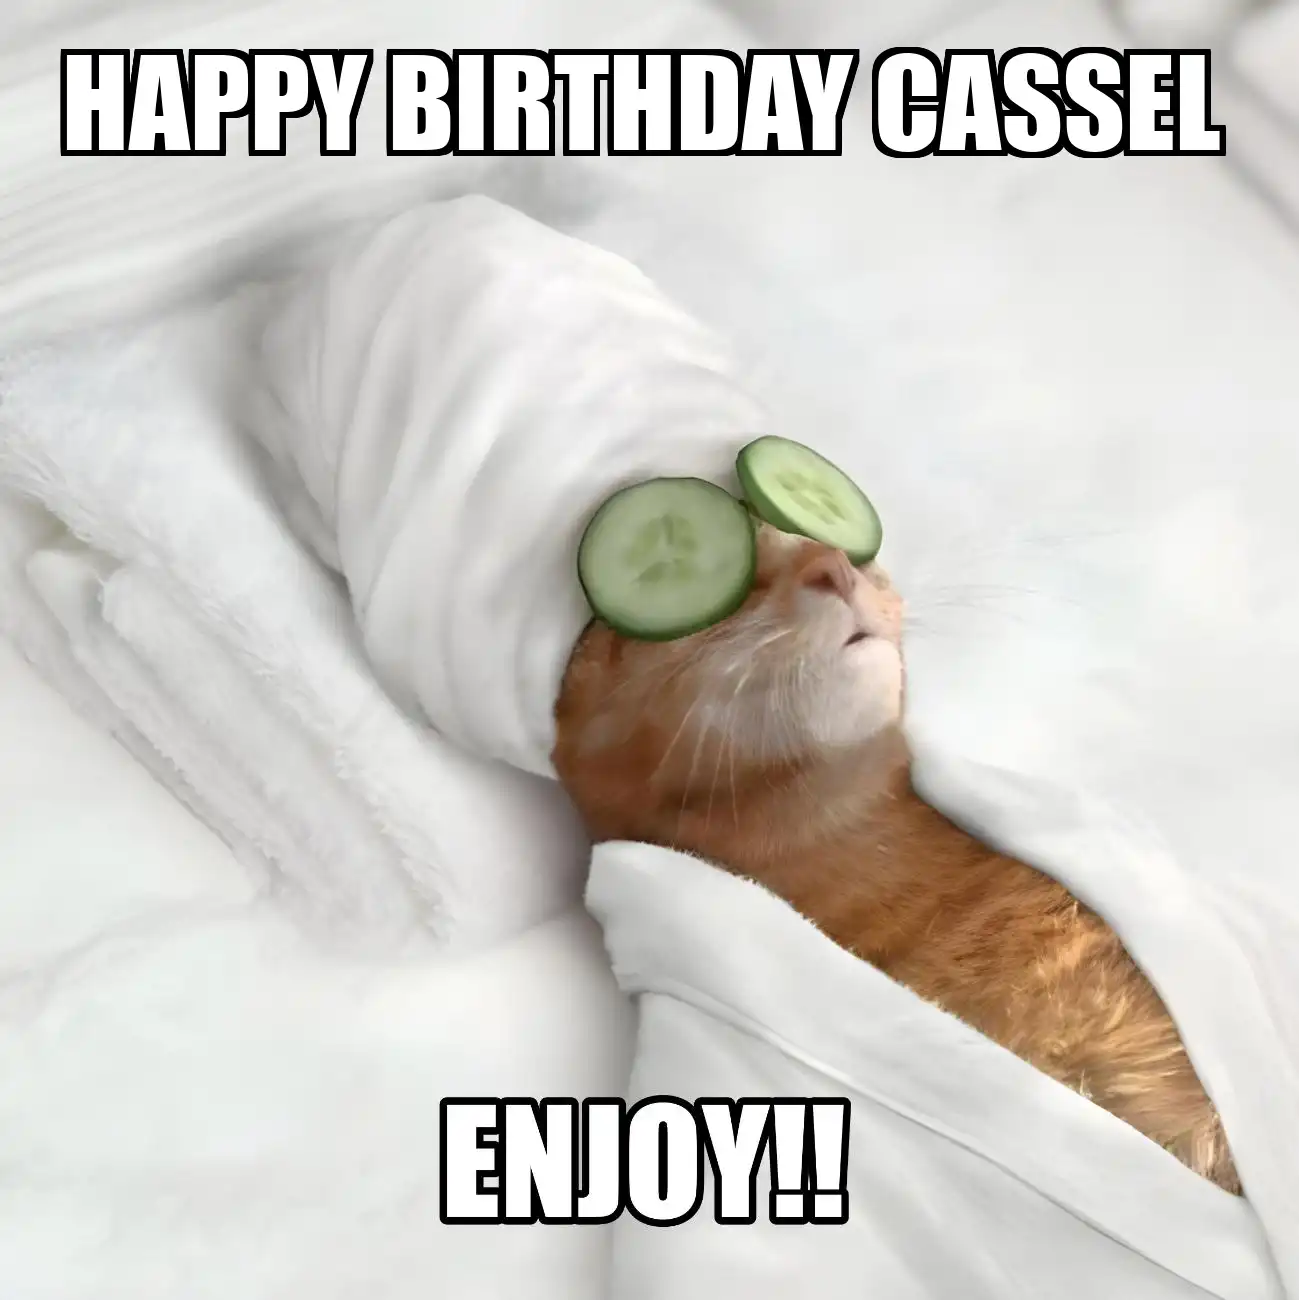 Happy Birthday Cassel Enjoy Cat Meme